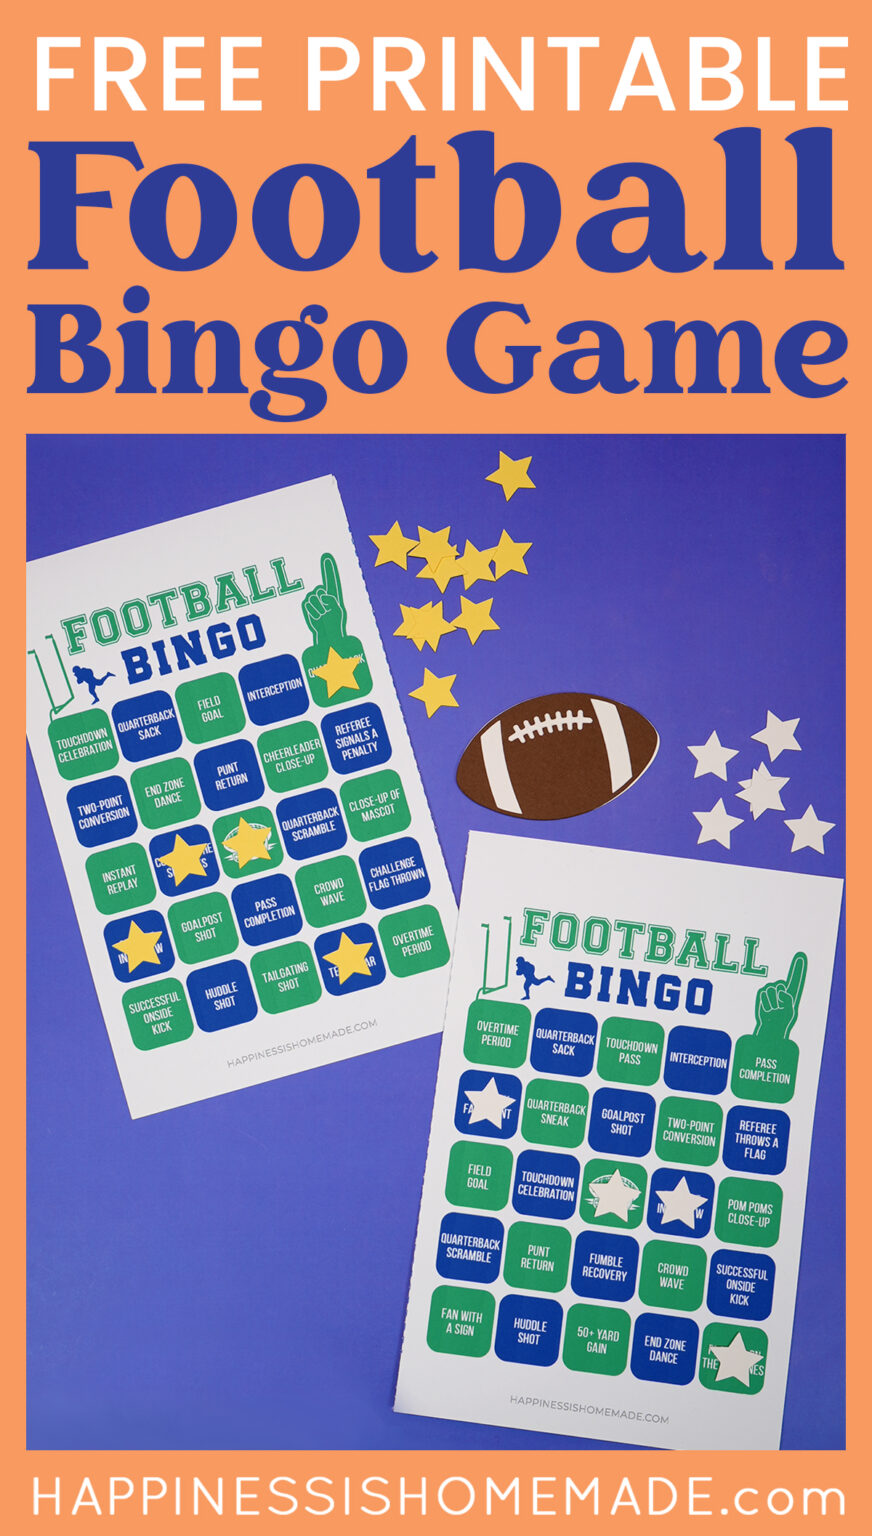 Free Printable Football Bingo Game Cards - Happiness is Homemade